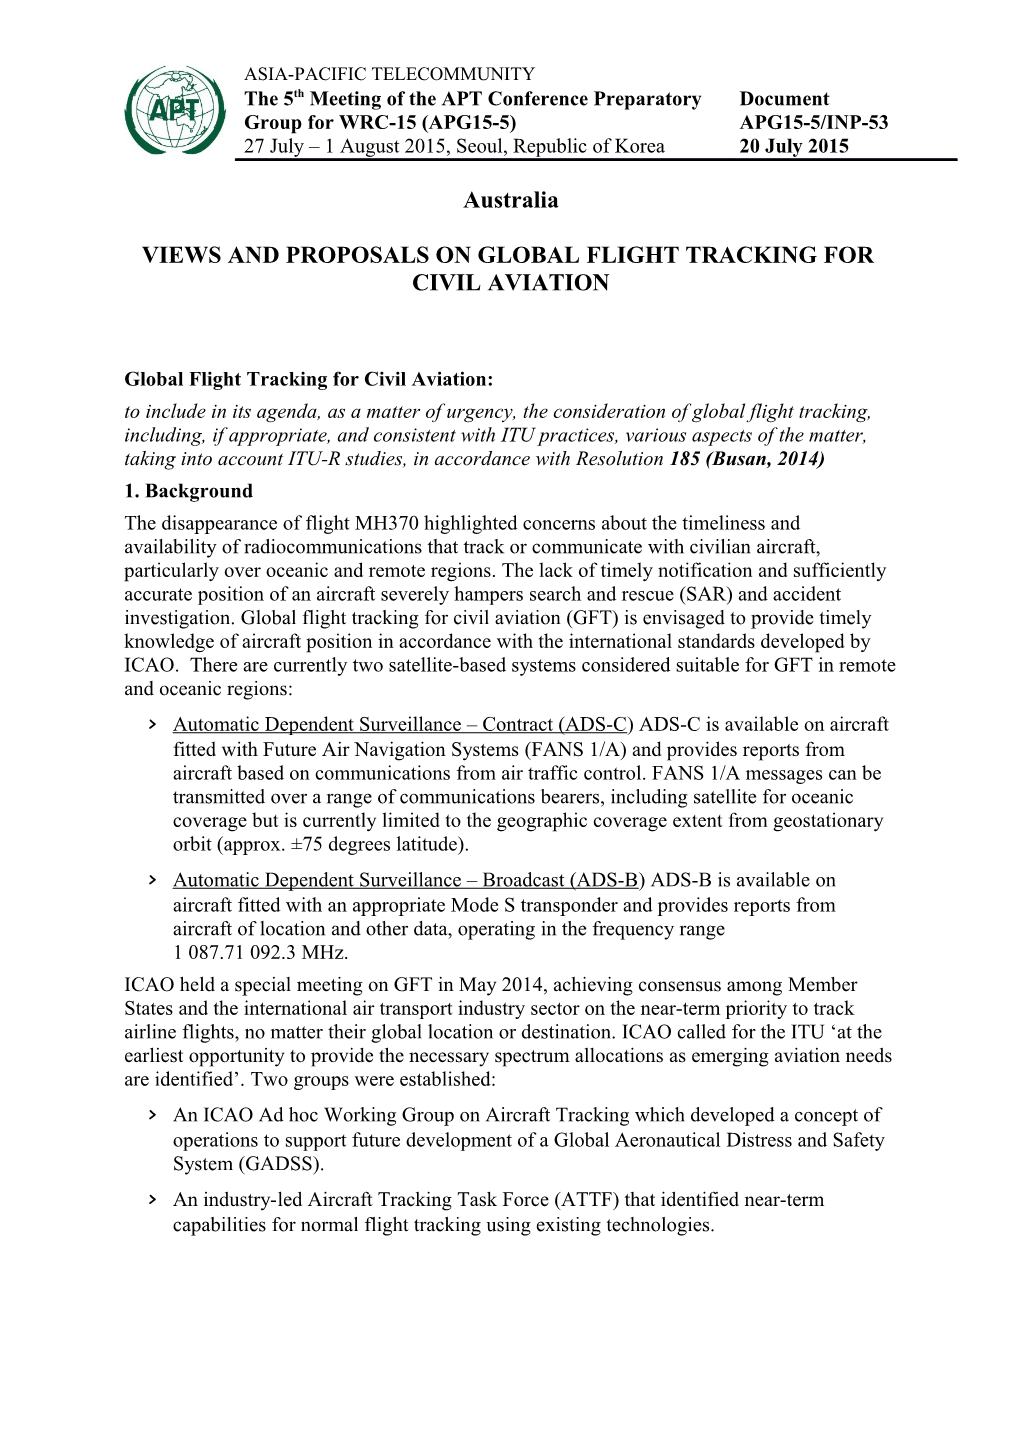 Global Flight Tracking for Civil Aviation